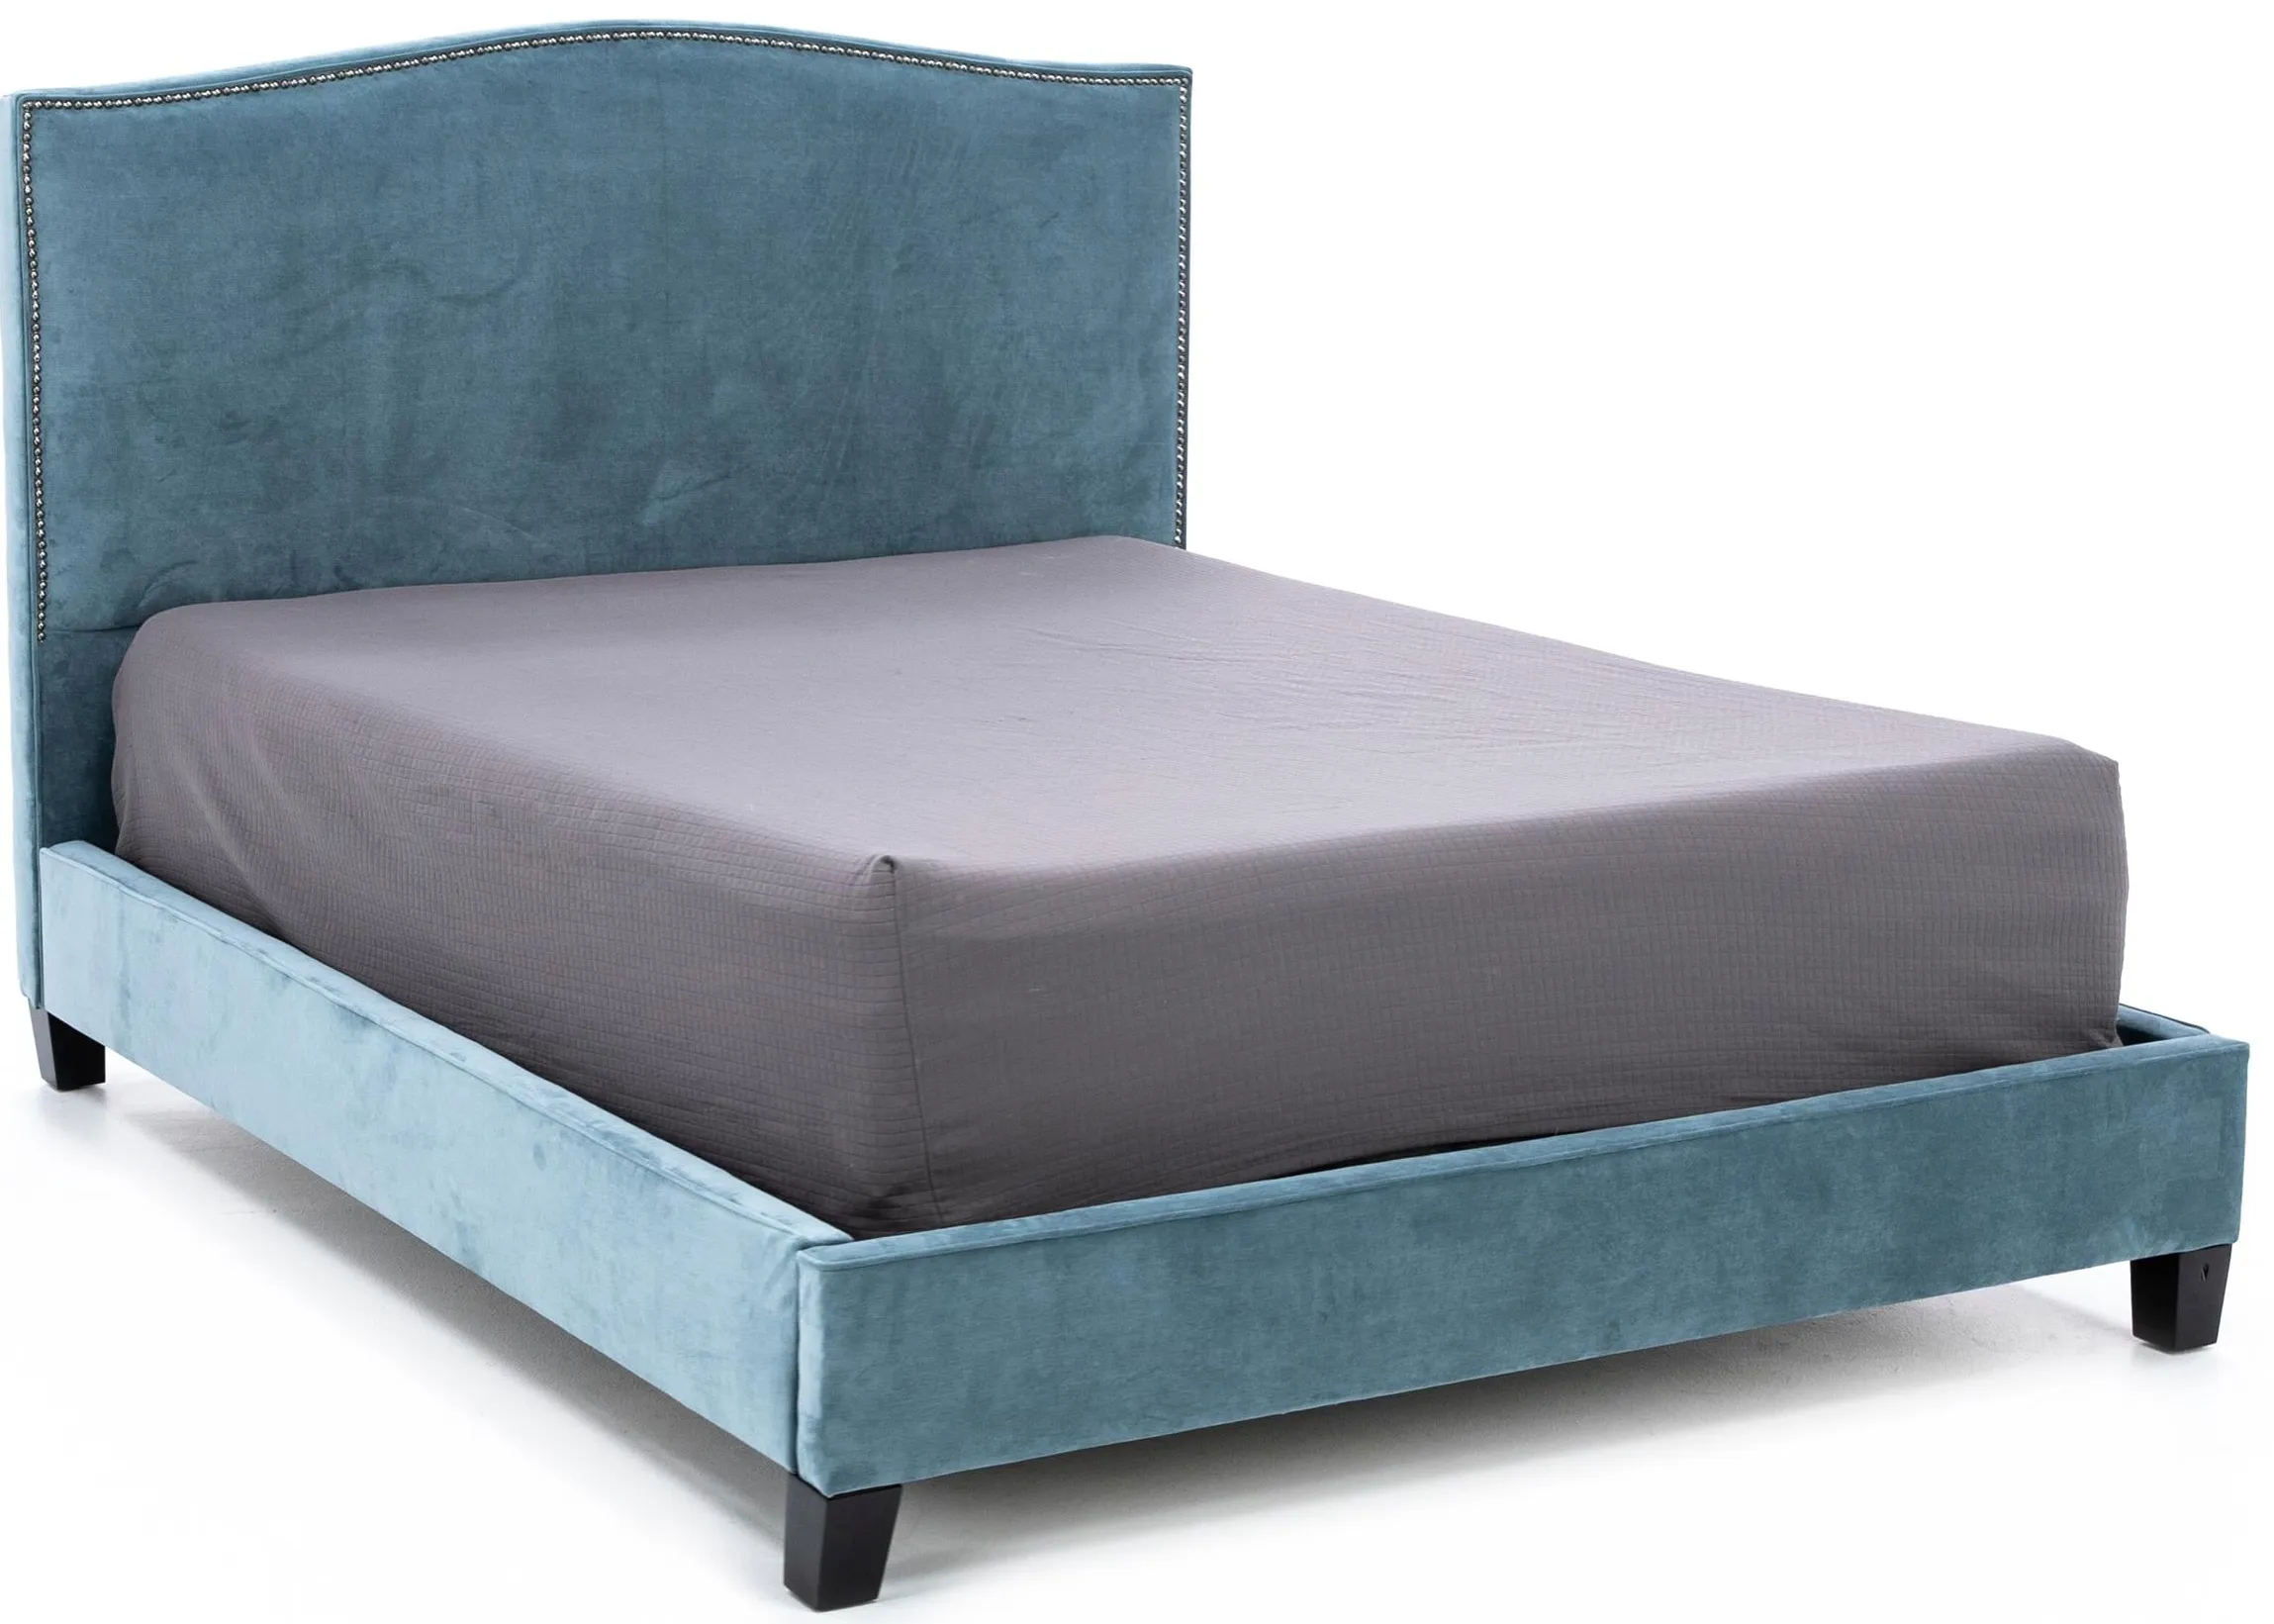 Corey King Upholstered Bed